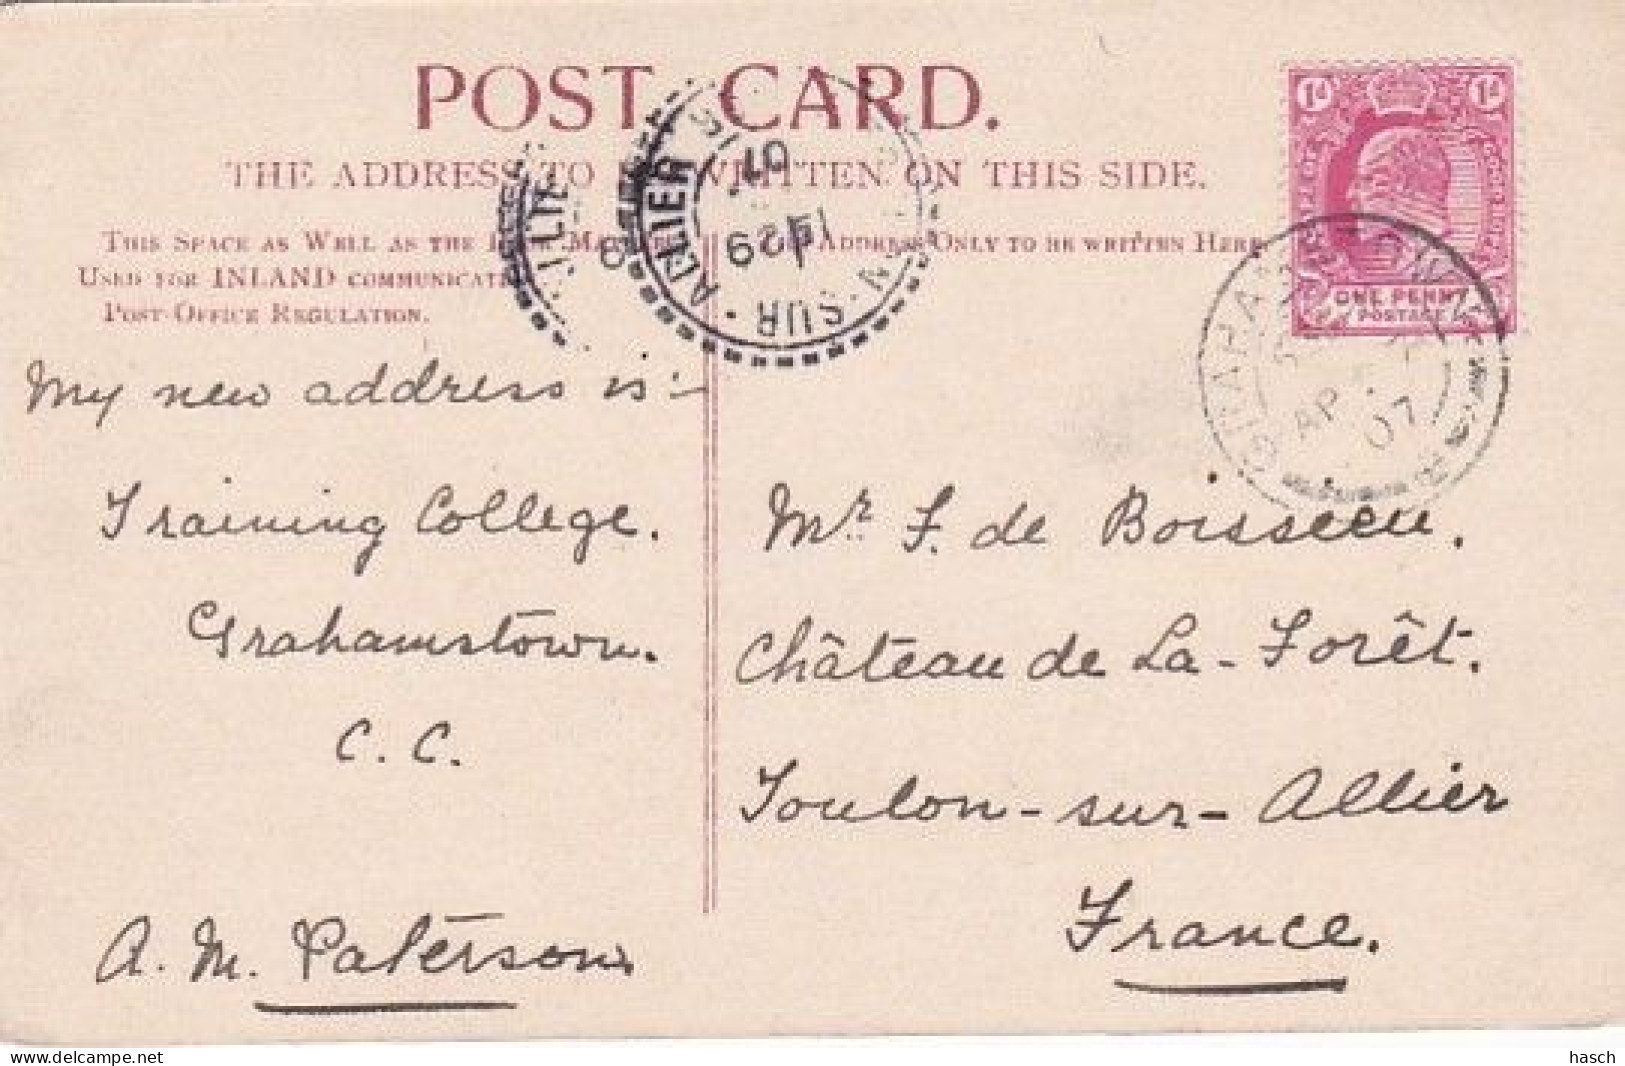 183053Grahamstown, Training School (postmark 1907) (little Crease Corners) - Afrique Du Sud